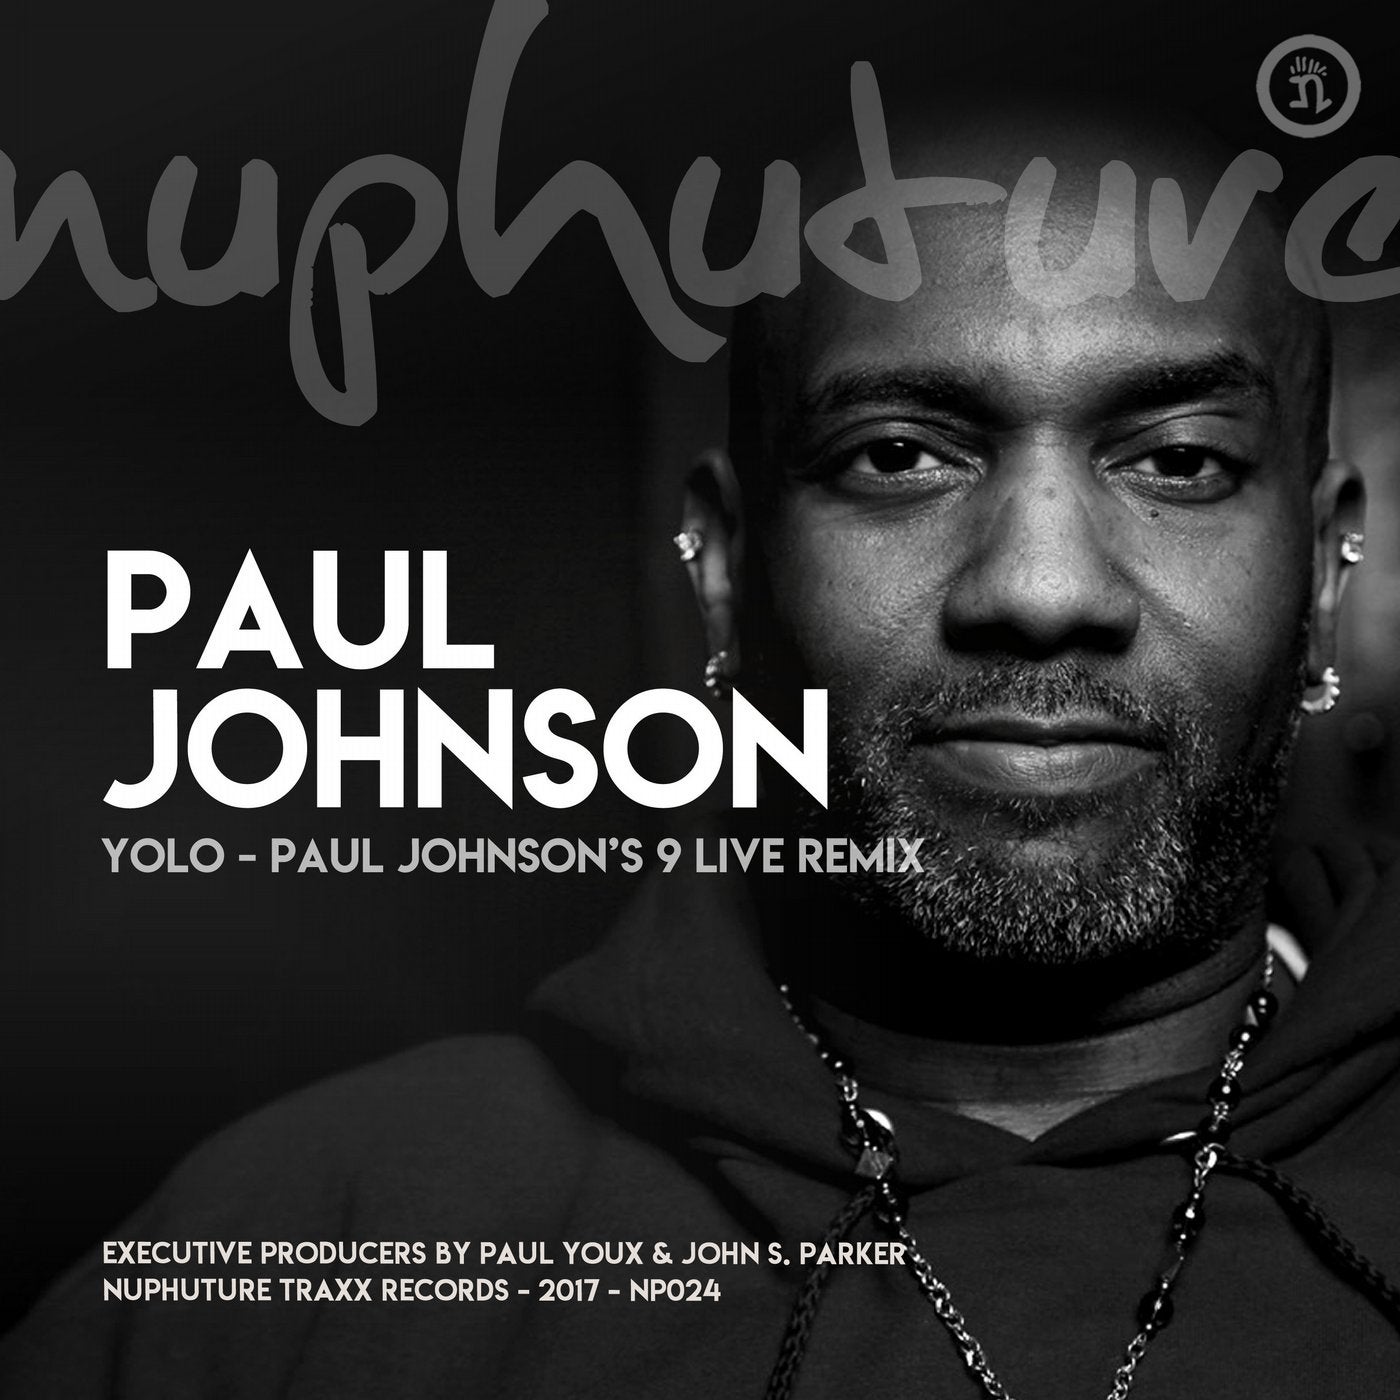 Yolo - Paul Johnson's 9 Live Remix